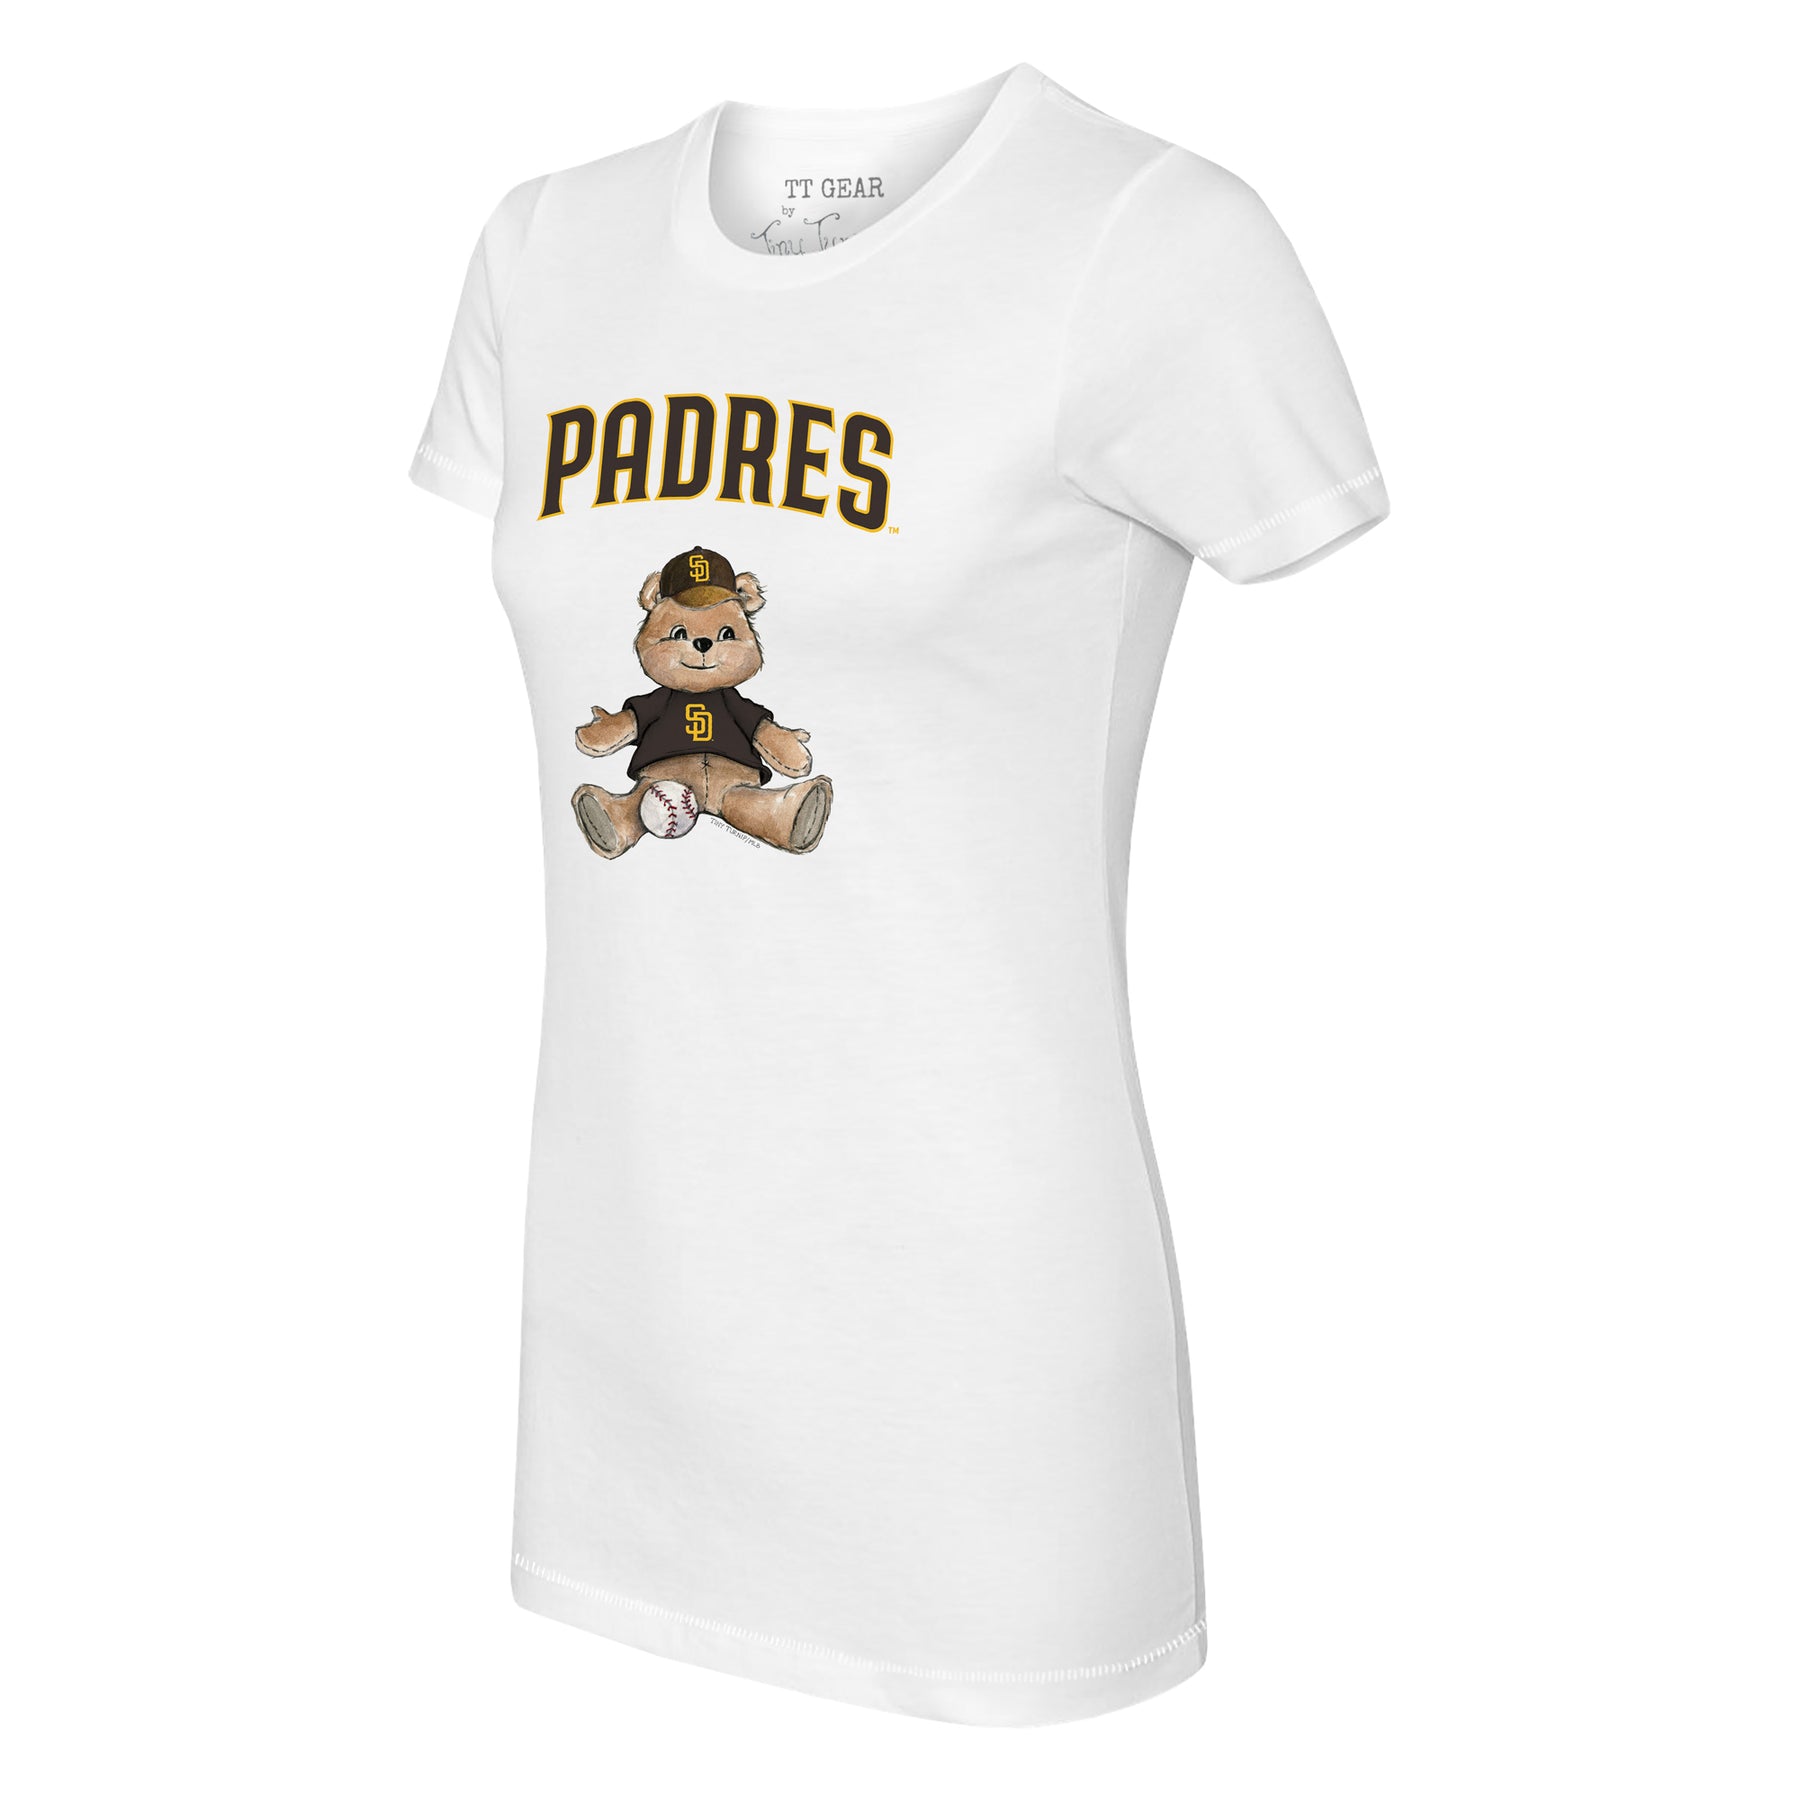 San Diego Padres Boy Teddy Tee Shirt